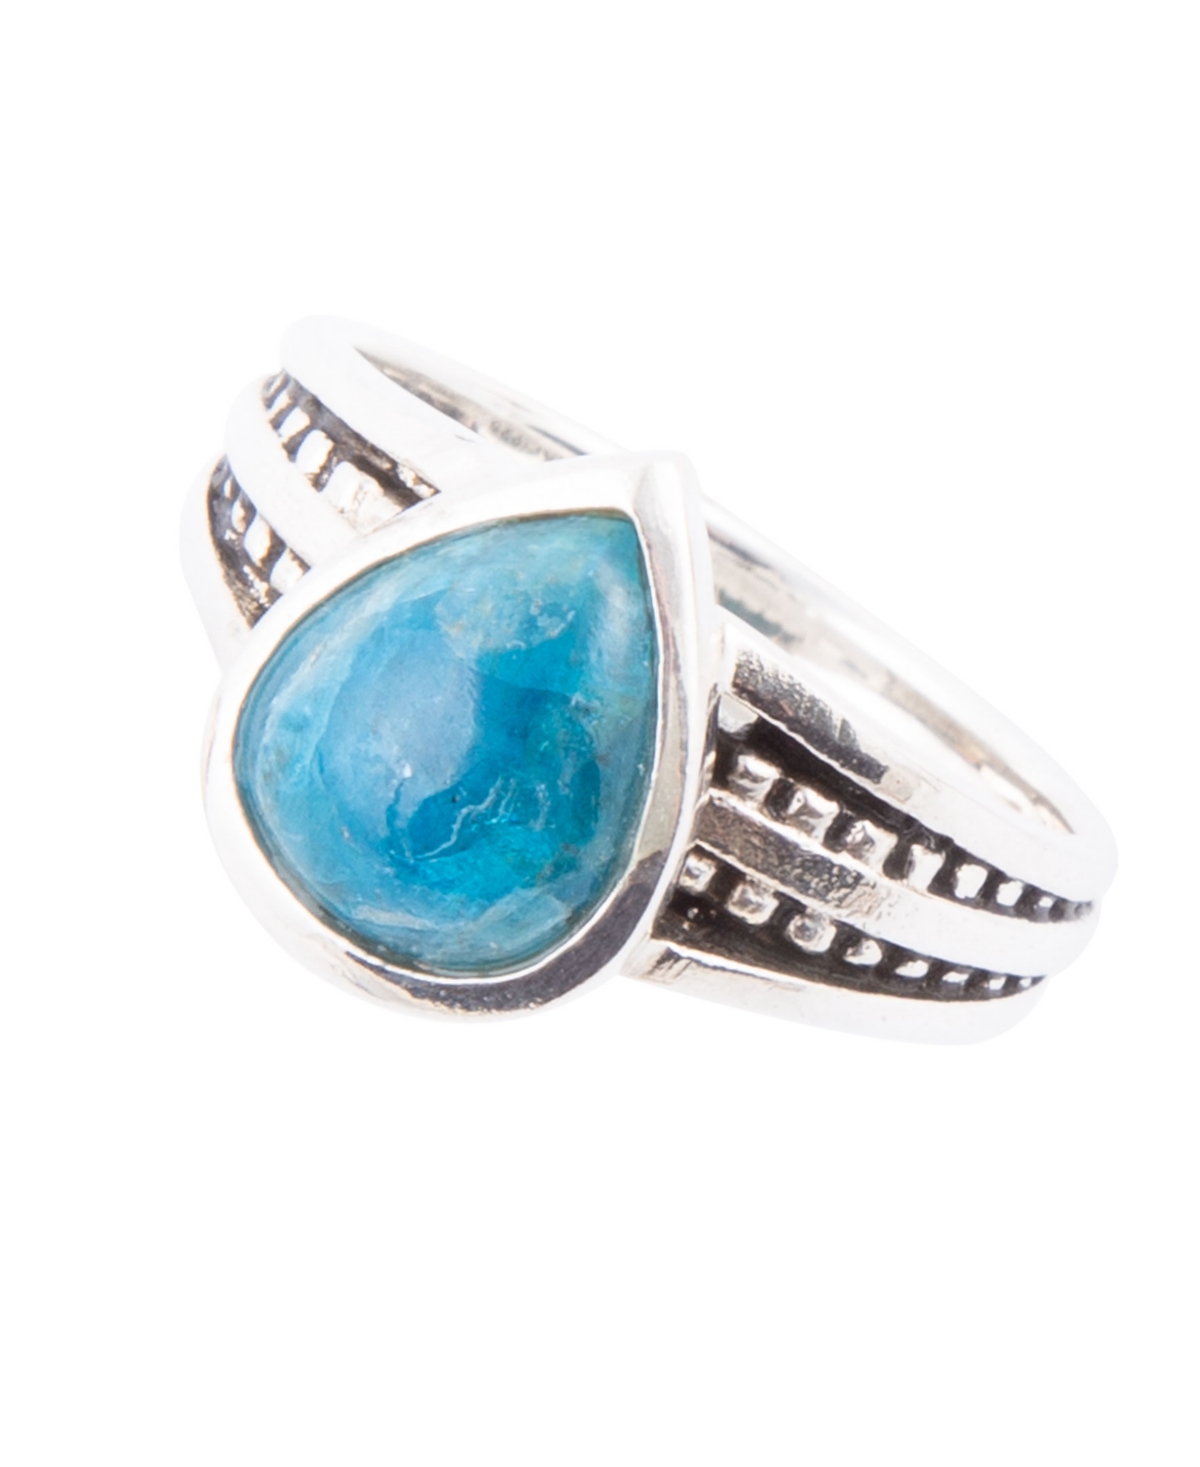 Astro Genuine Blue Apatite Teardrop Sterling Silver Ring - Genuine blue apatite